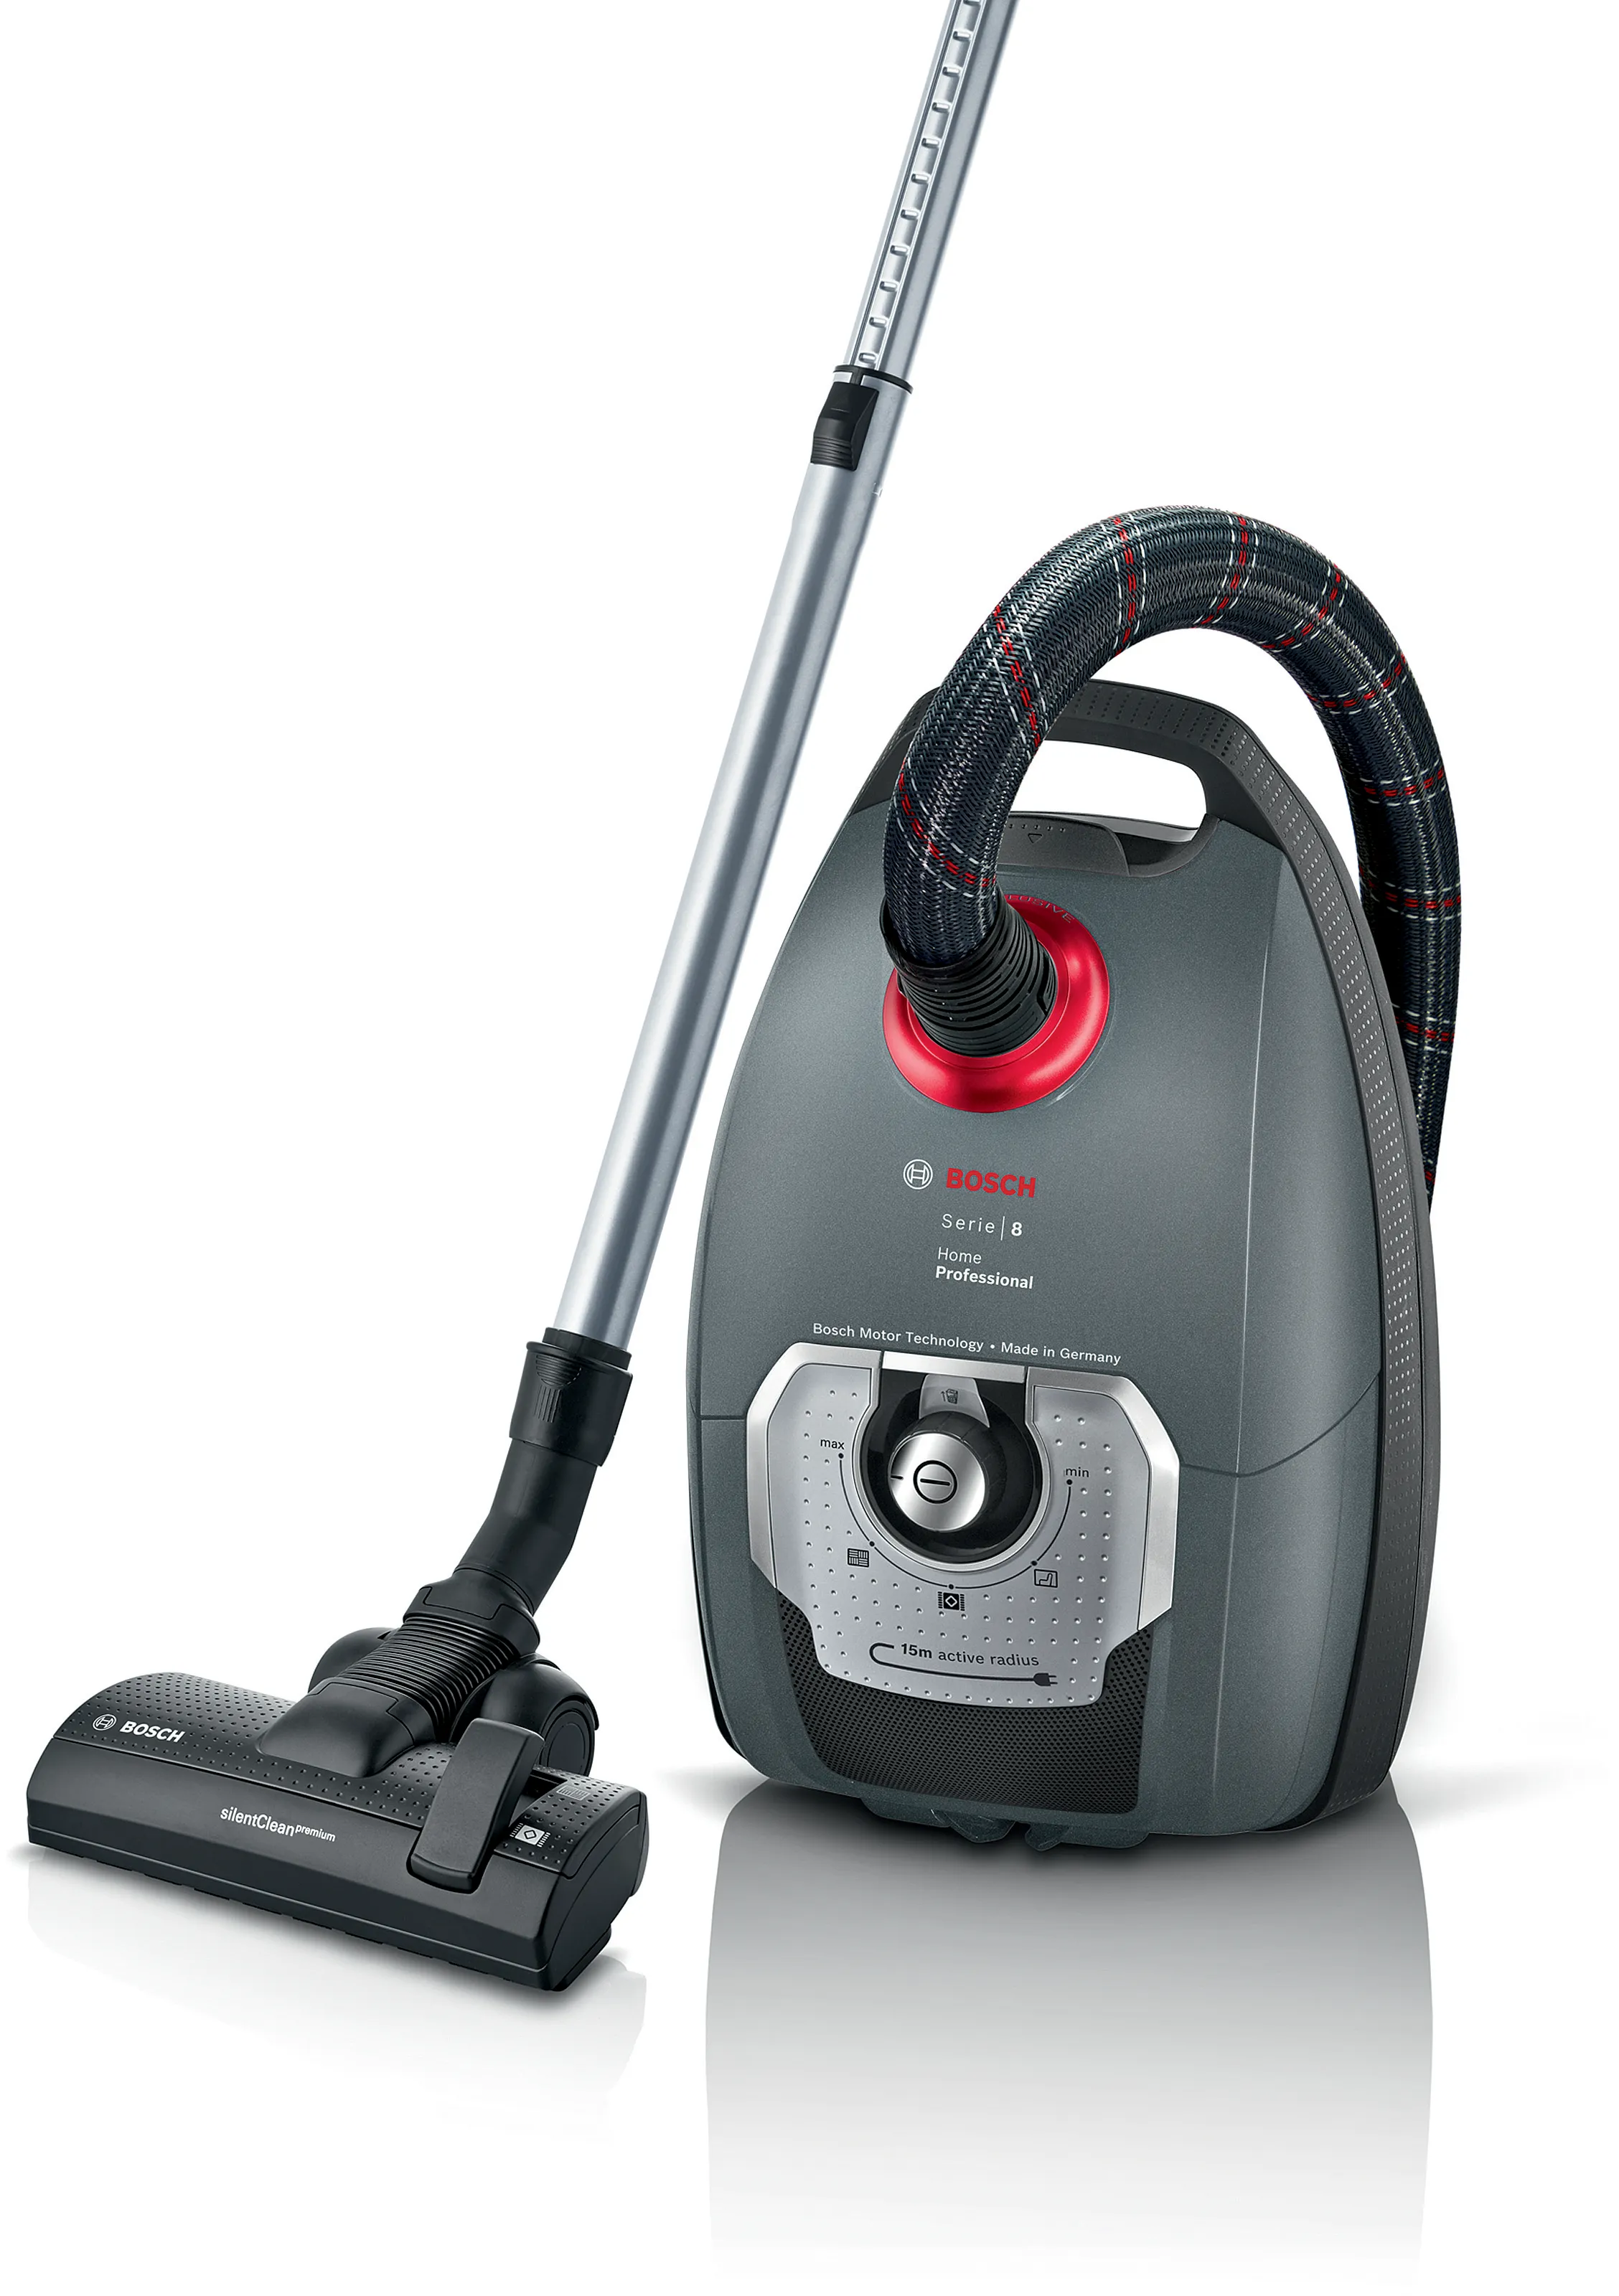 Series 8 Bagged vacuum cleaner Home Professional Black 